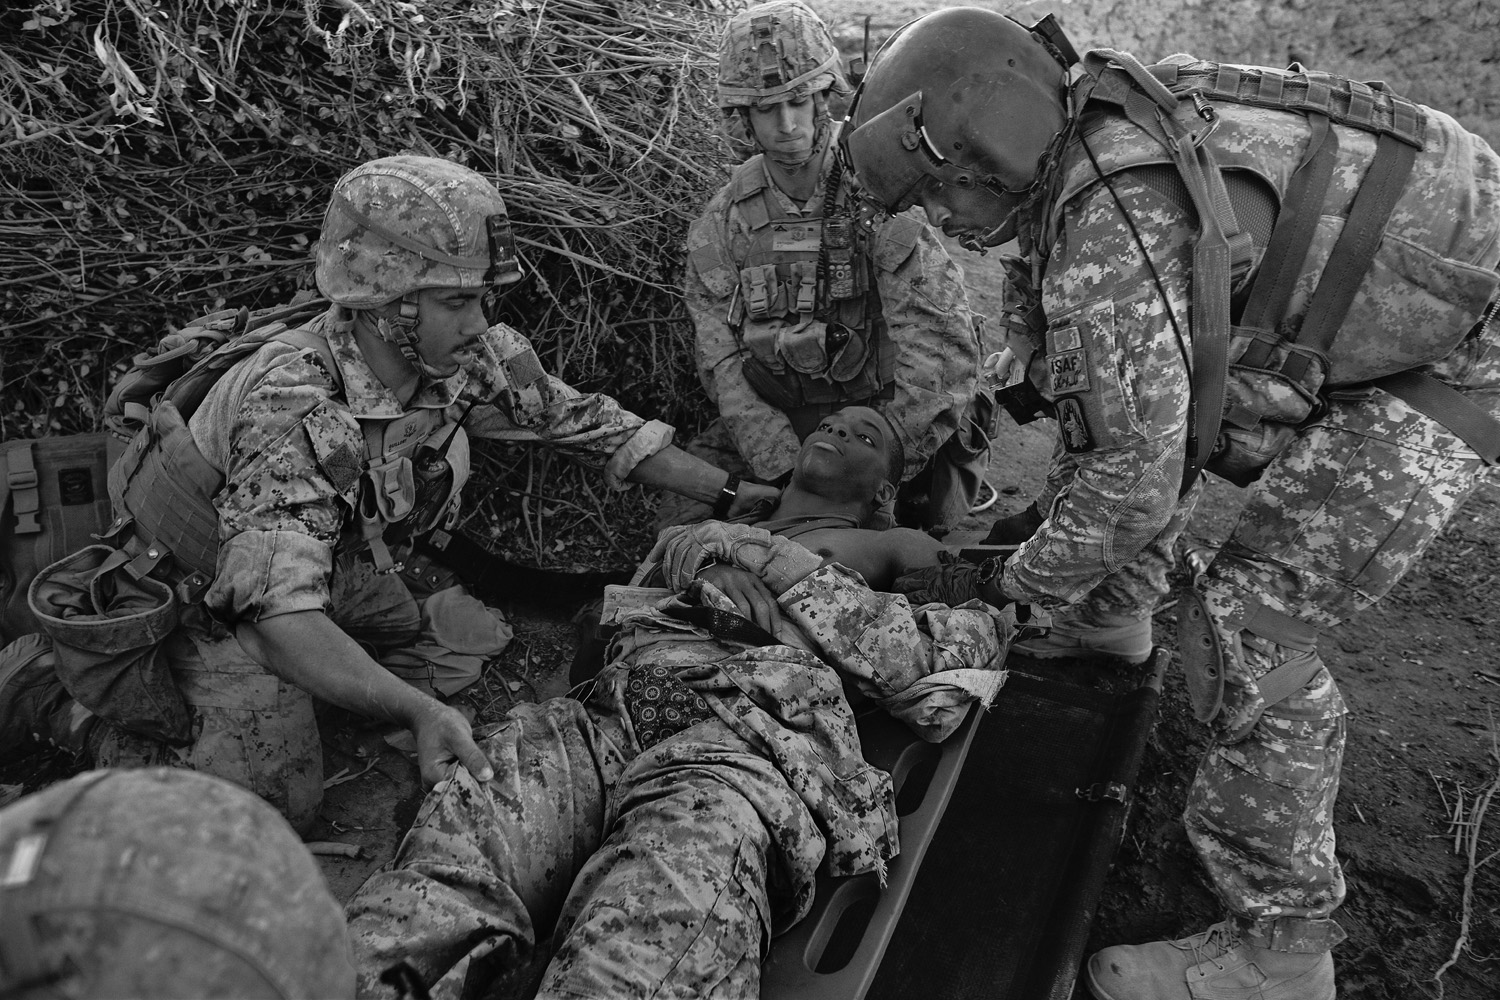 Medevac crew members prepare to evacuate a wounded Marine in Helmand province in 2010